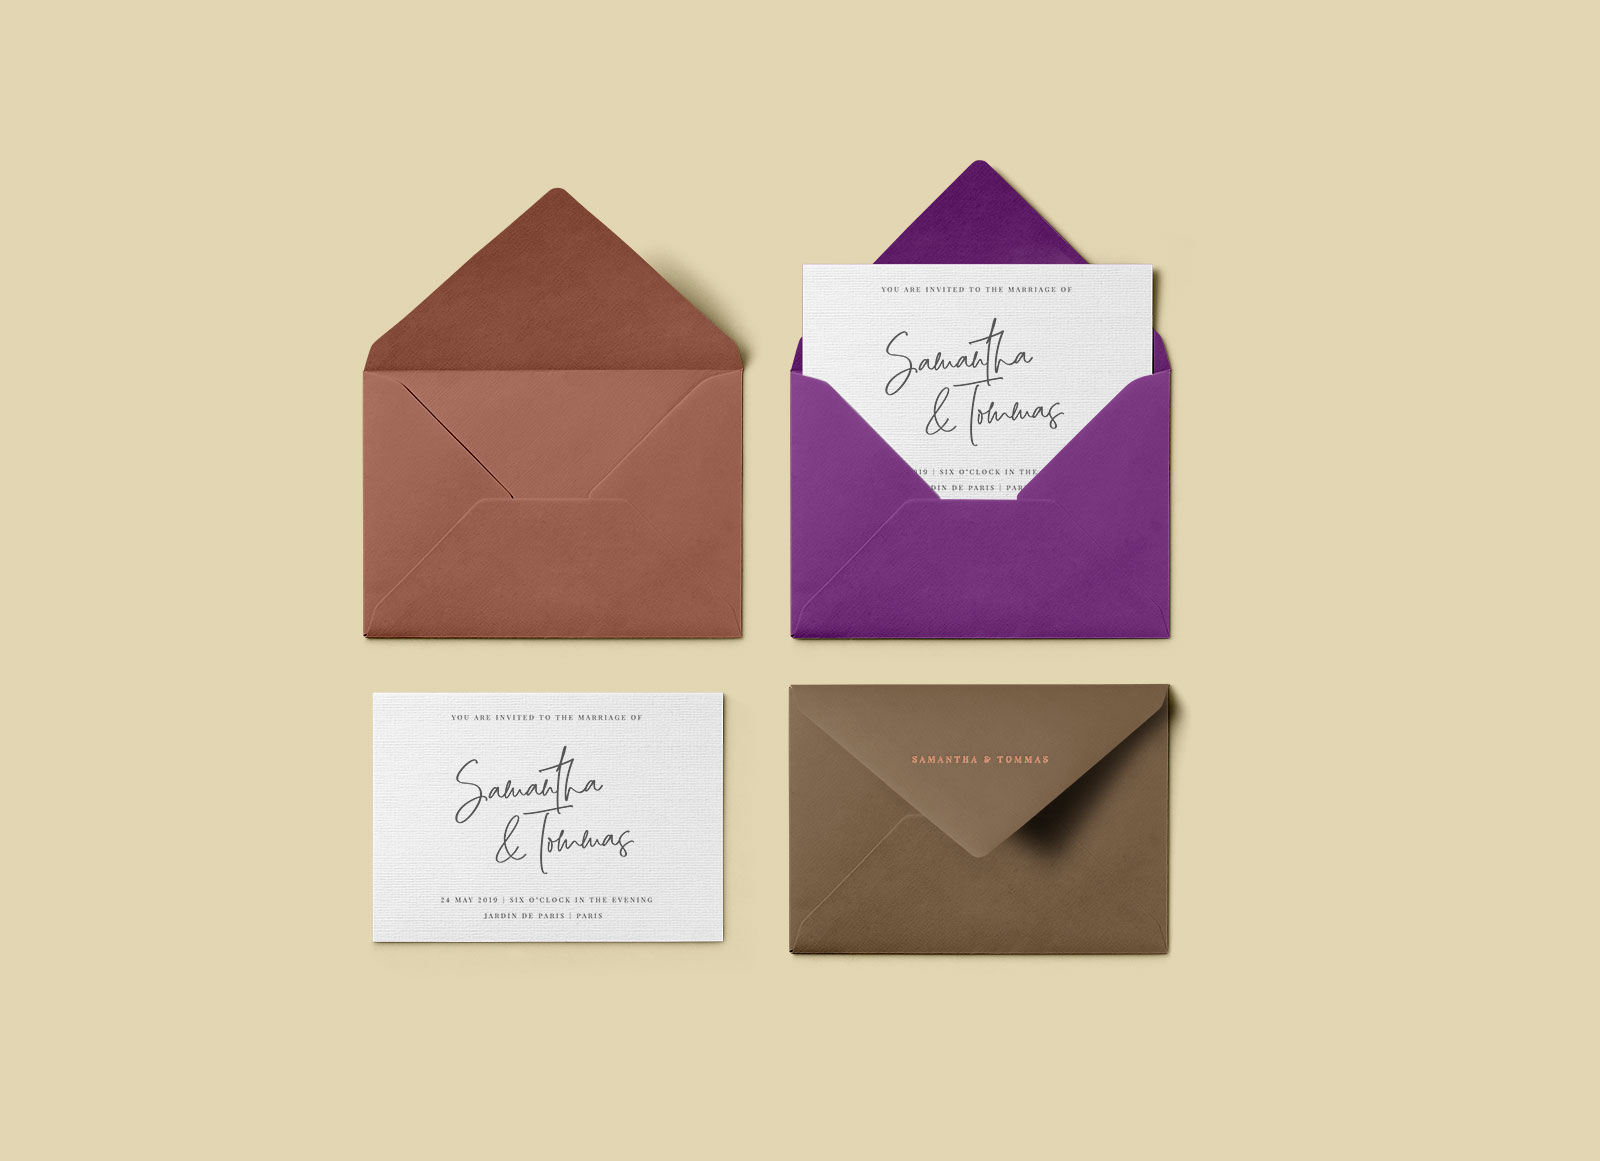 Free-Greeting-Card-with-Stylish-Envelope-Mockup-PSD